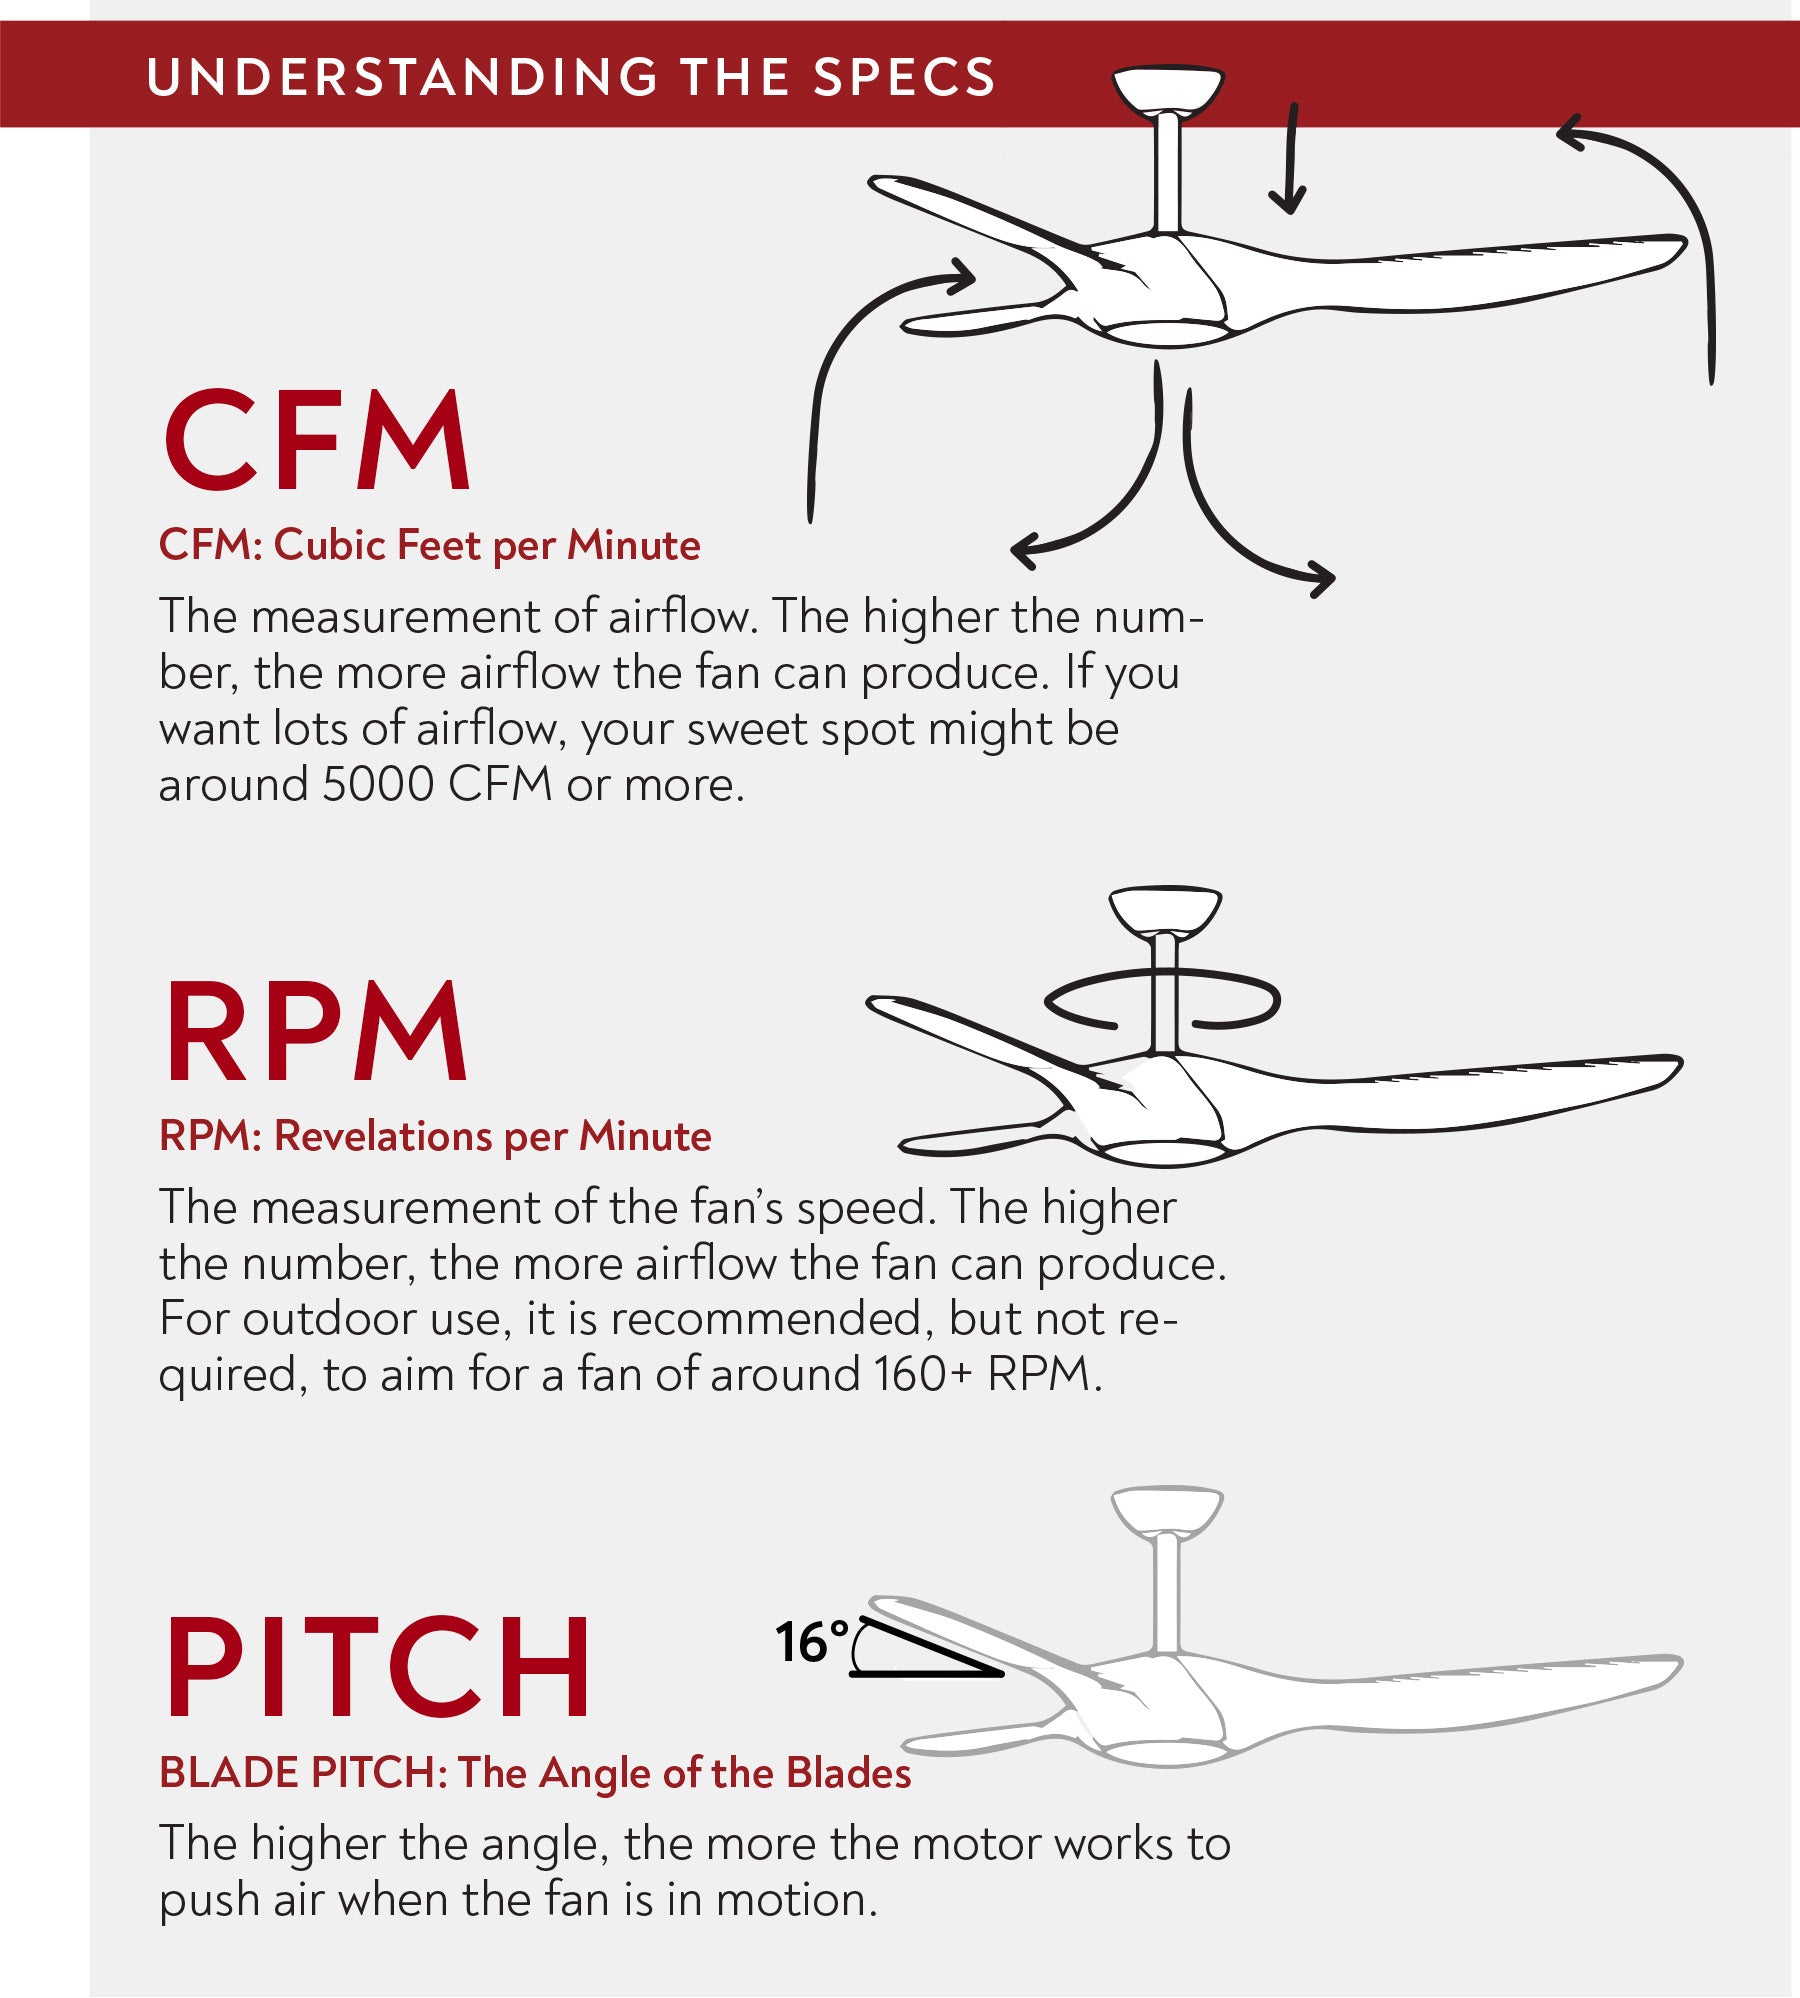 What is fan CFM? What is fan RPM? What is fan blade pitch?